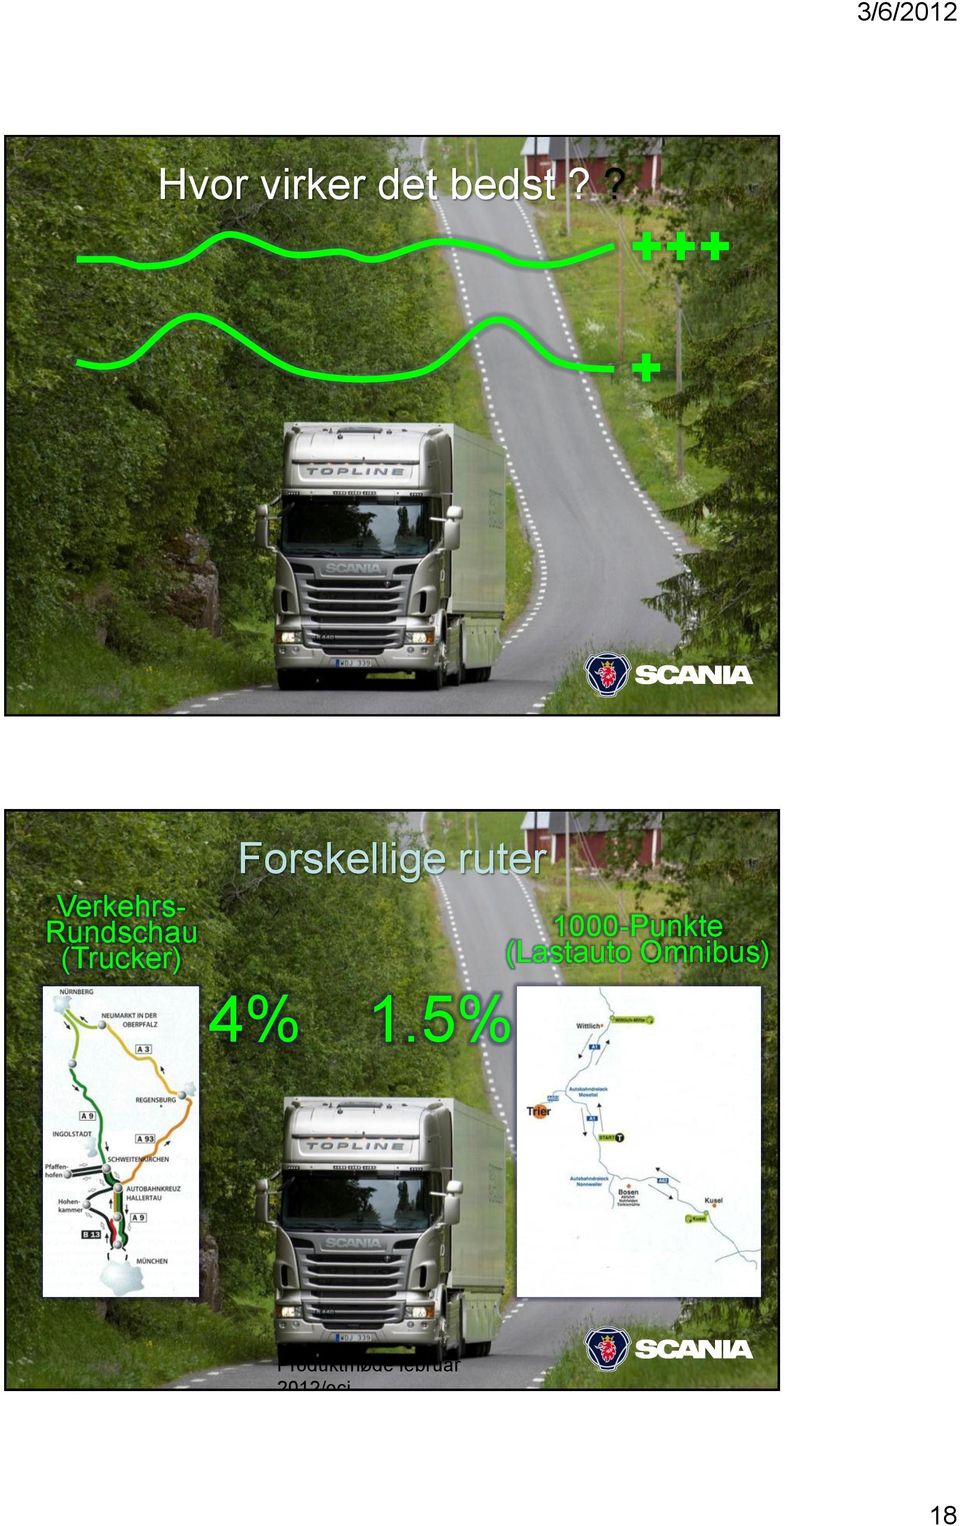 (Trucker) Forskellige ruter 4% 1.